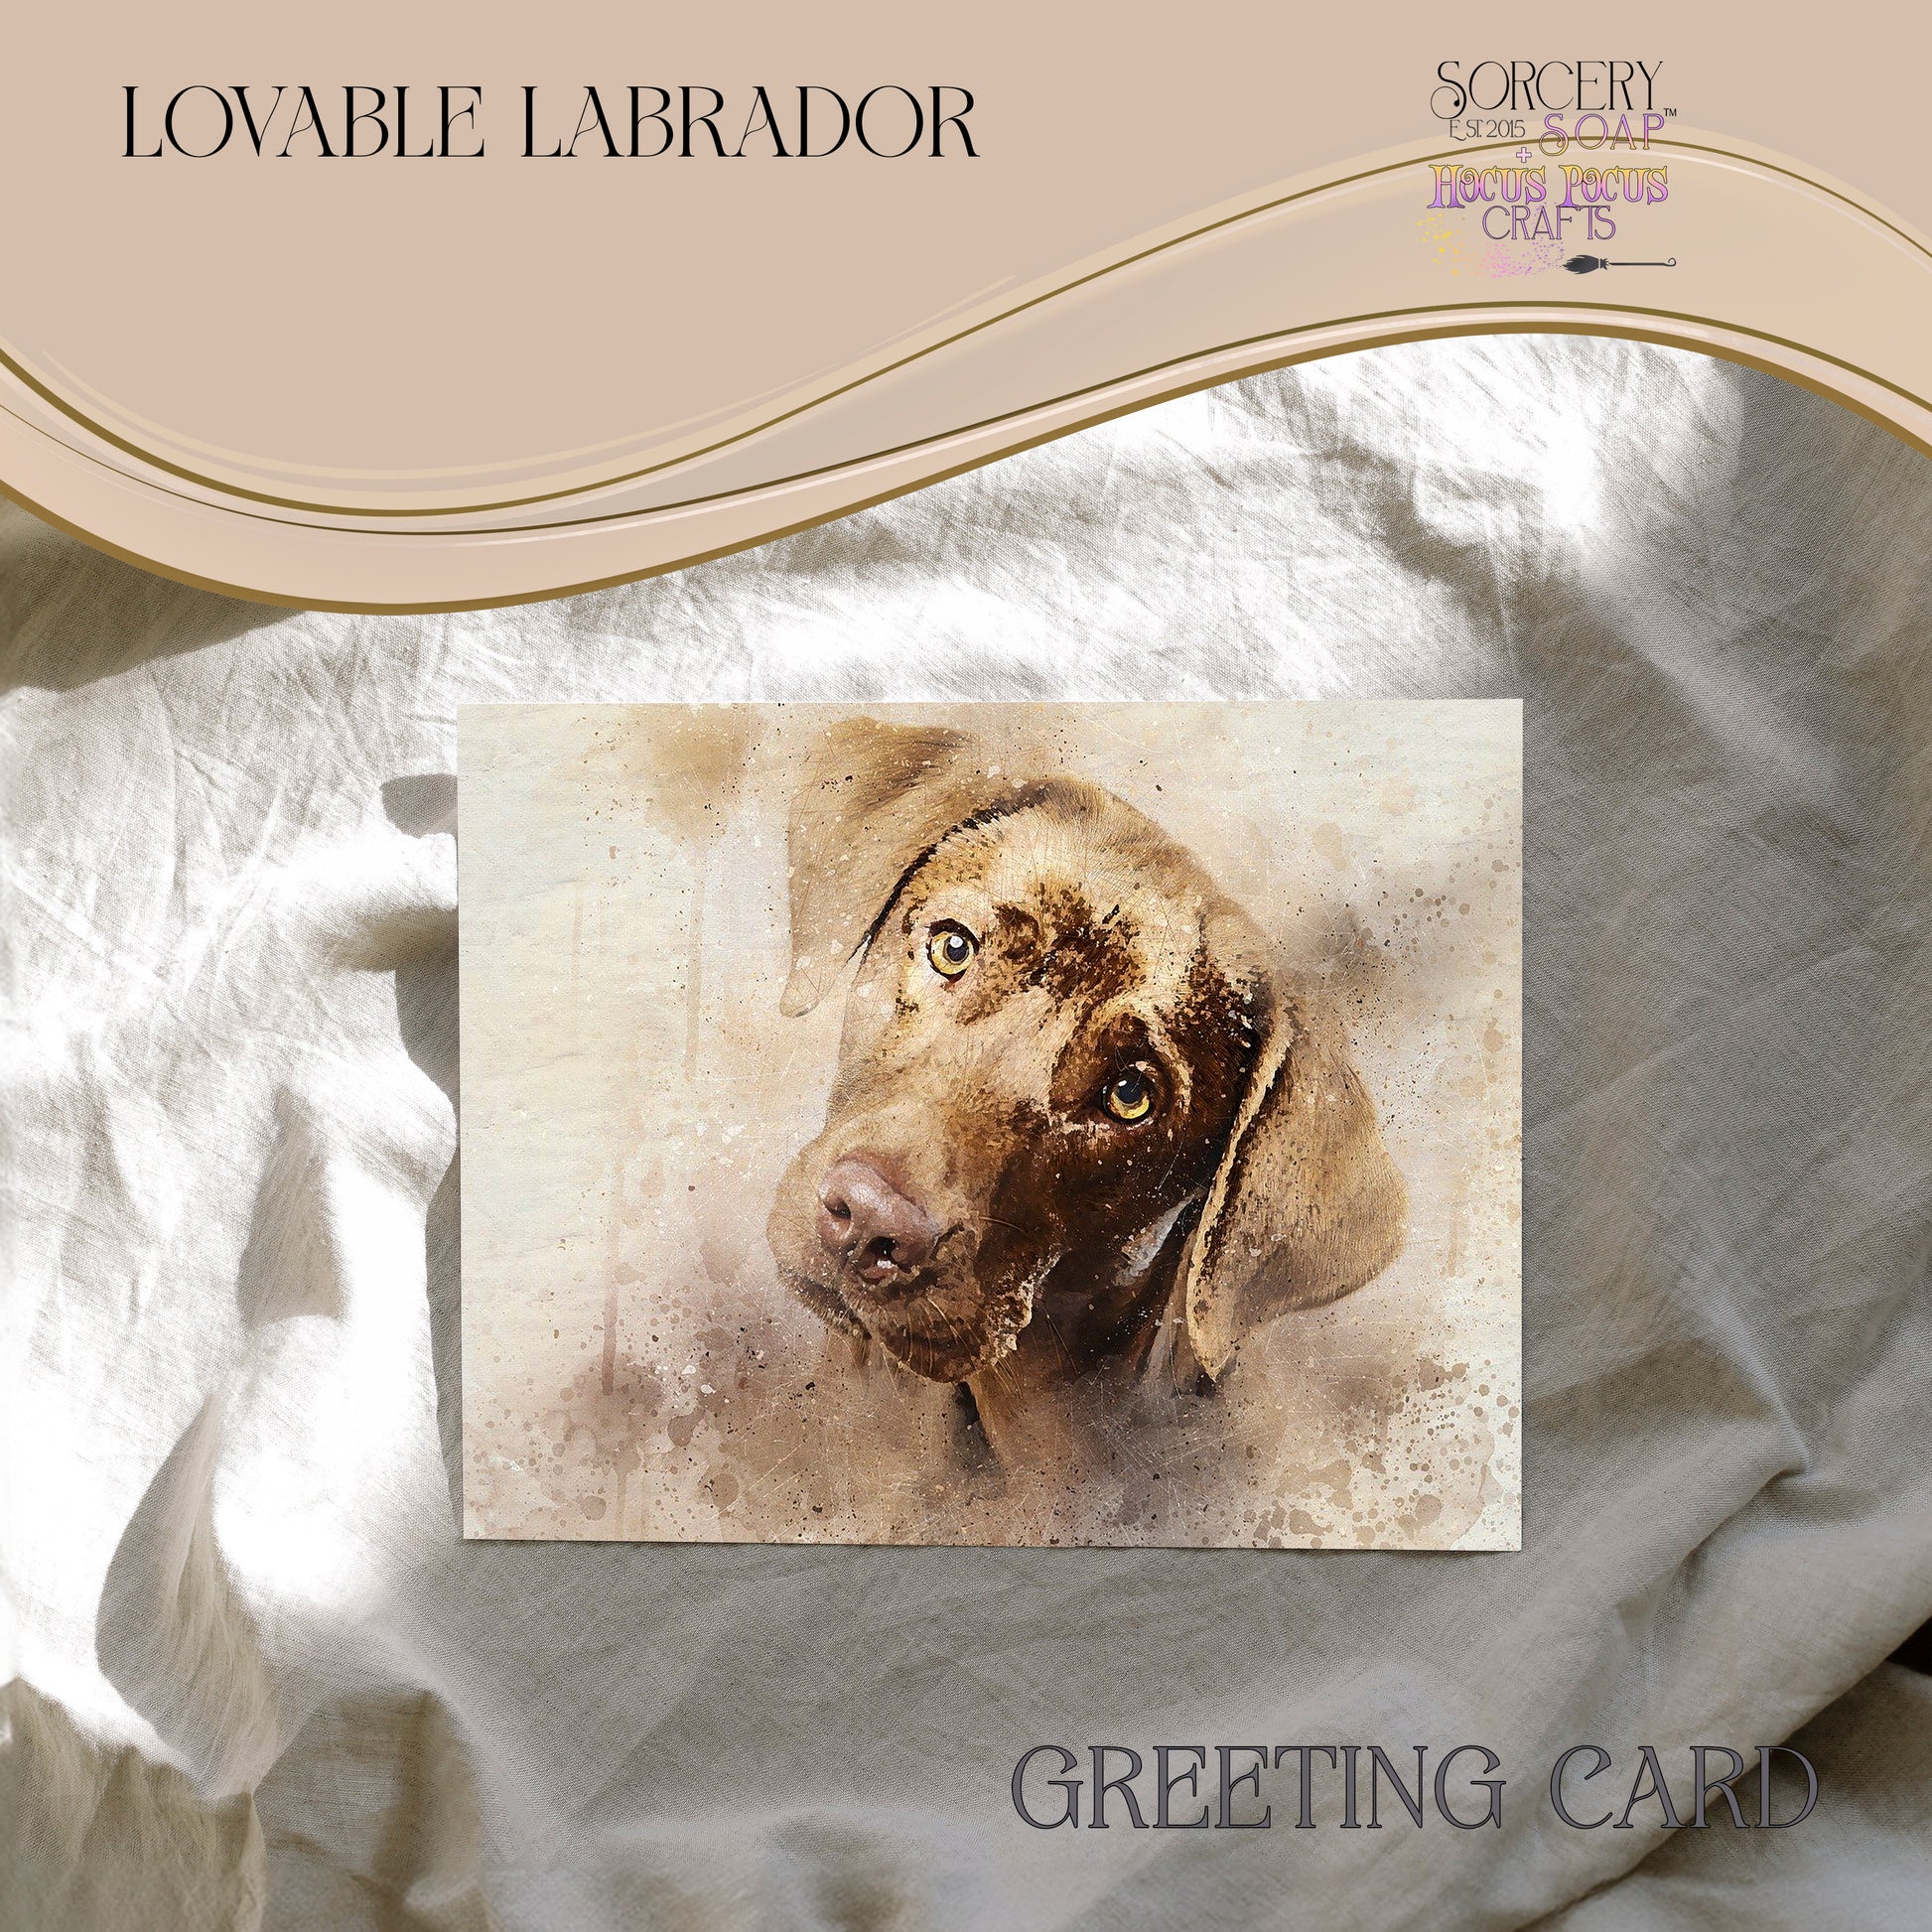 Lovable Labrador Dog Greeting Card